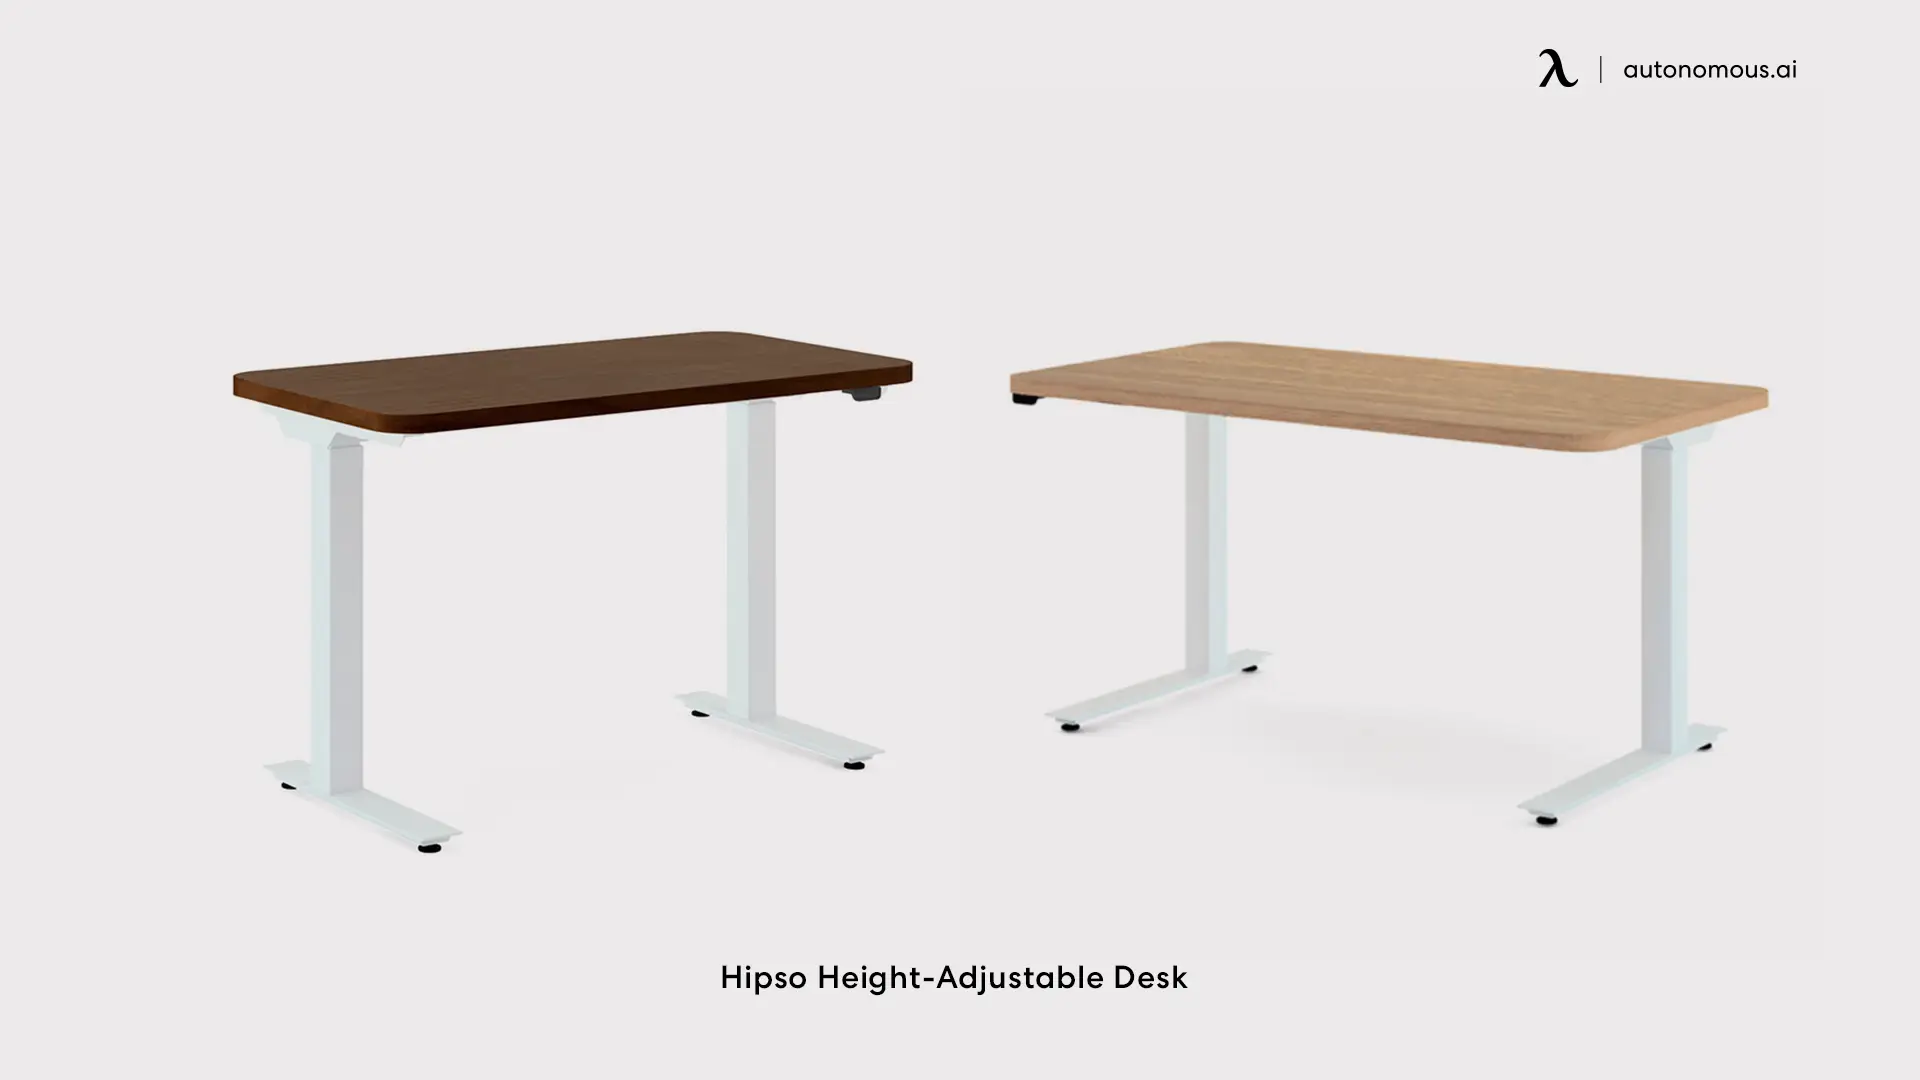 Hipso Height-Adjustable Desk